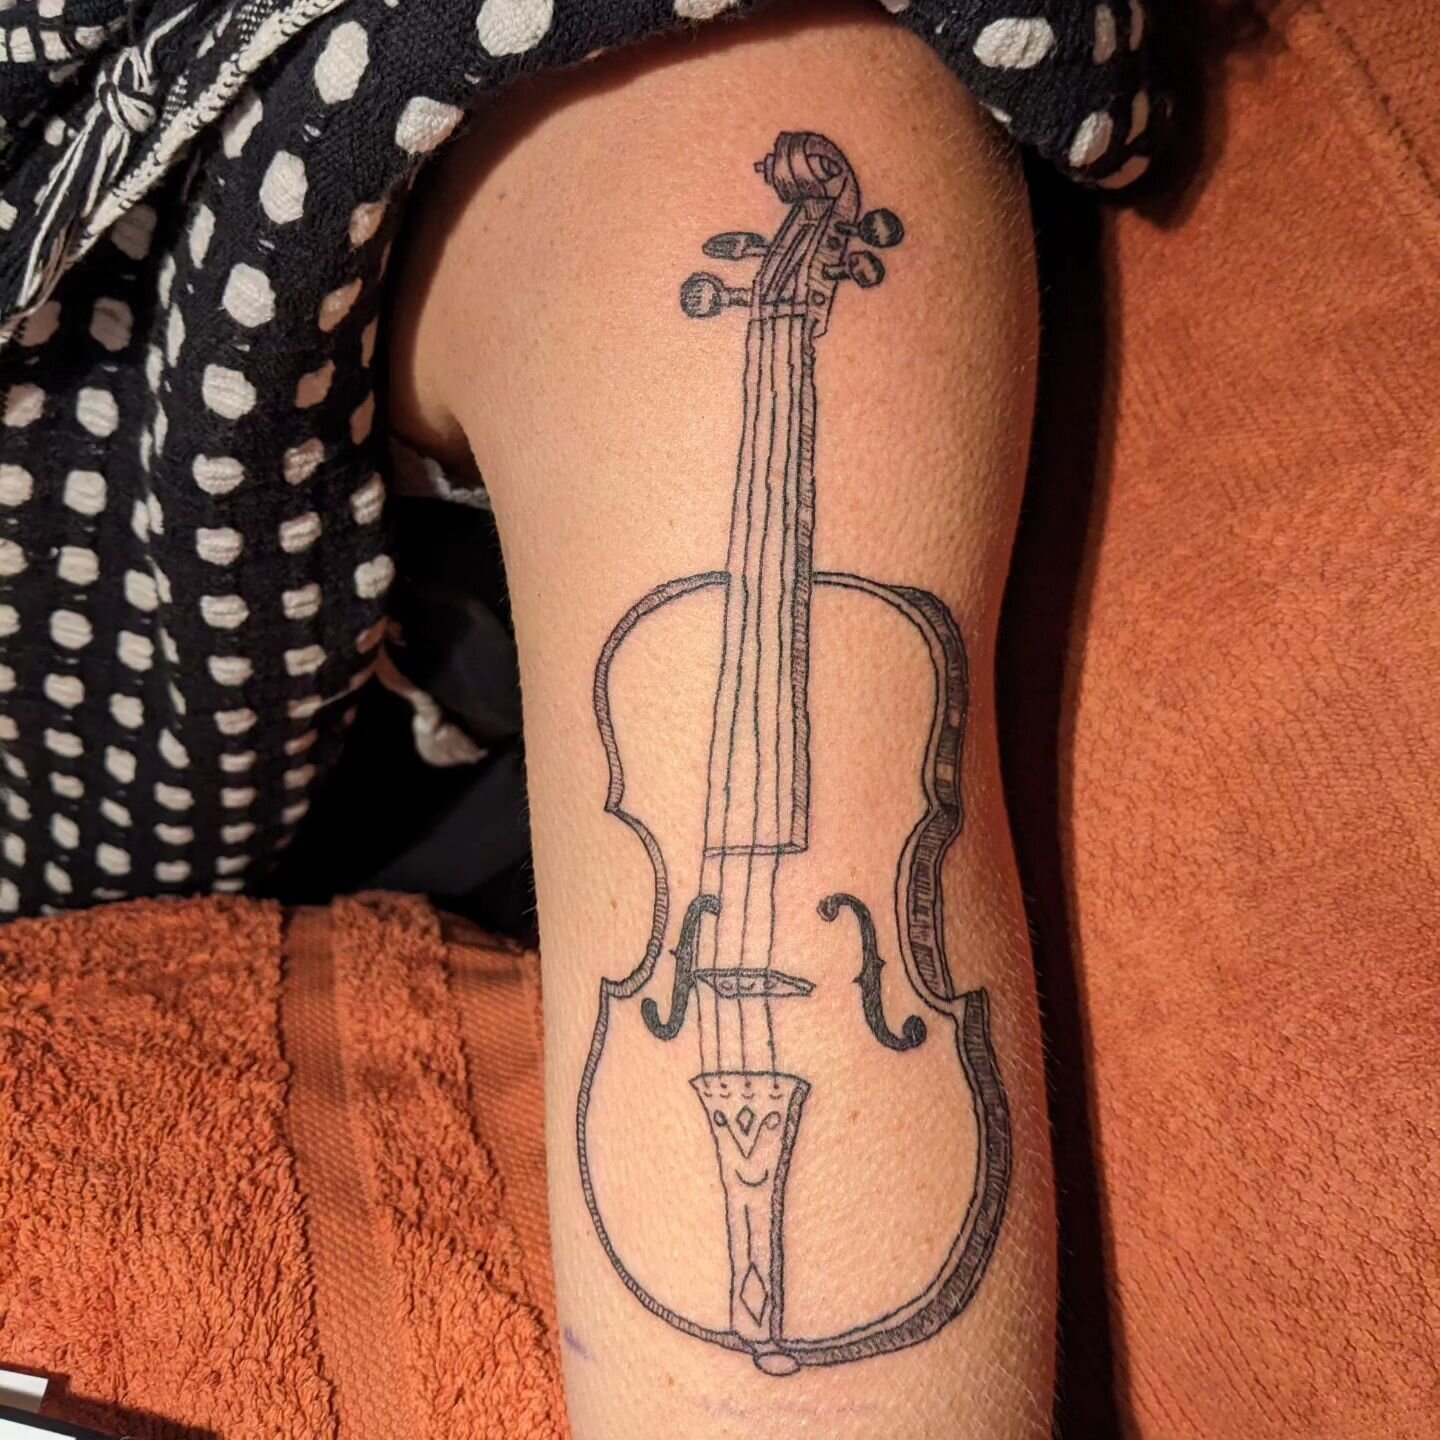 Fiddle and banjo custom tattoos I did a few months back 
#bristoltattoo #bristoltattooartist